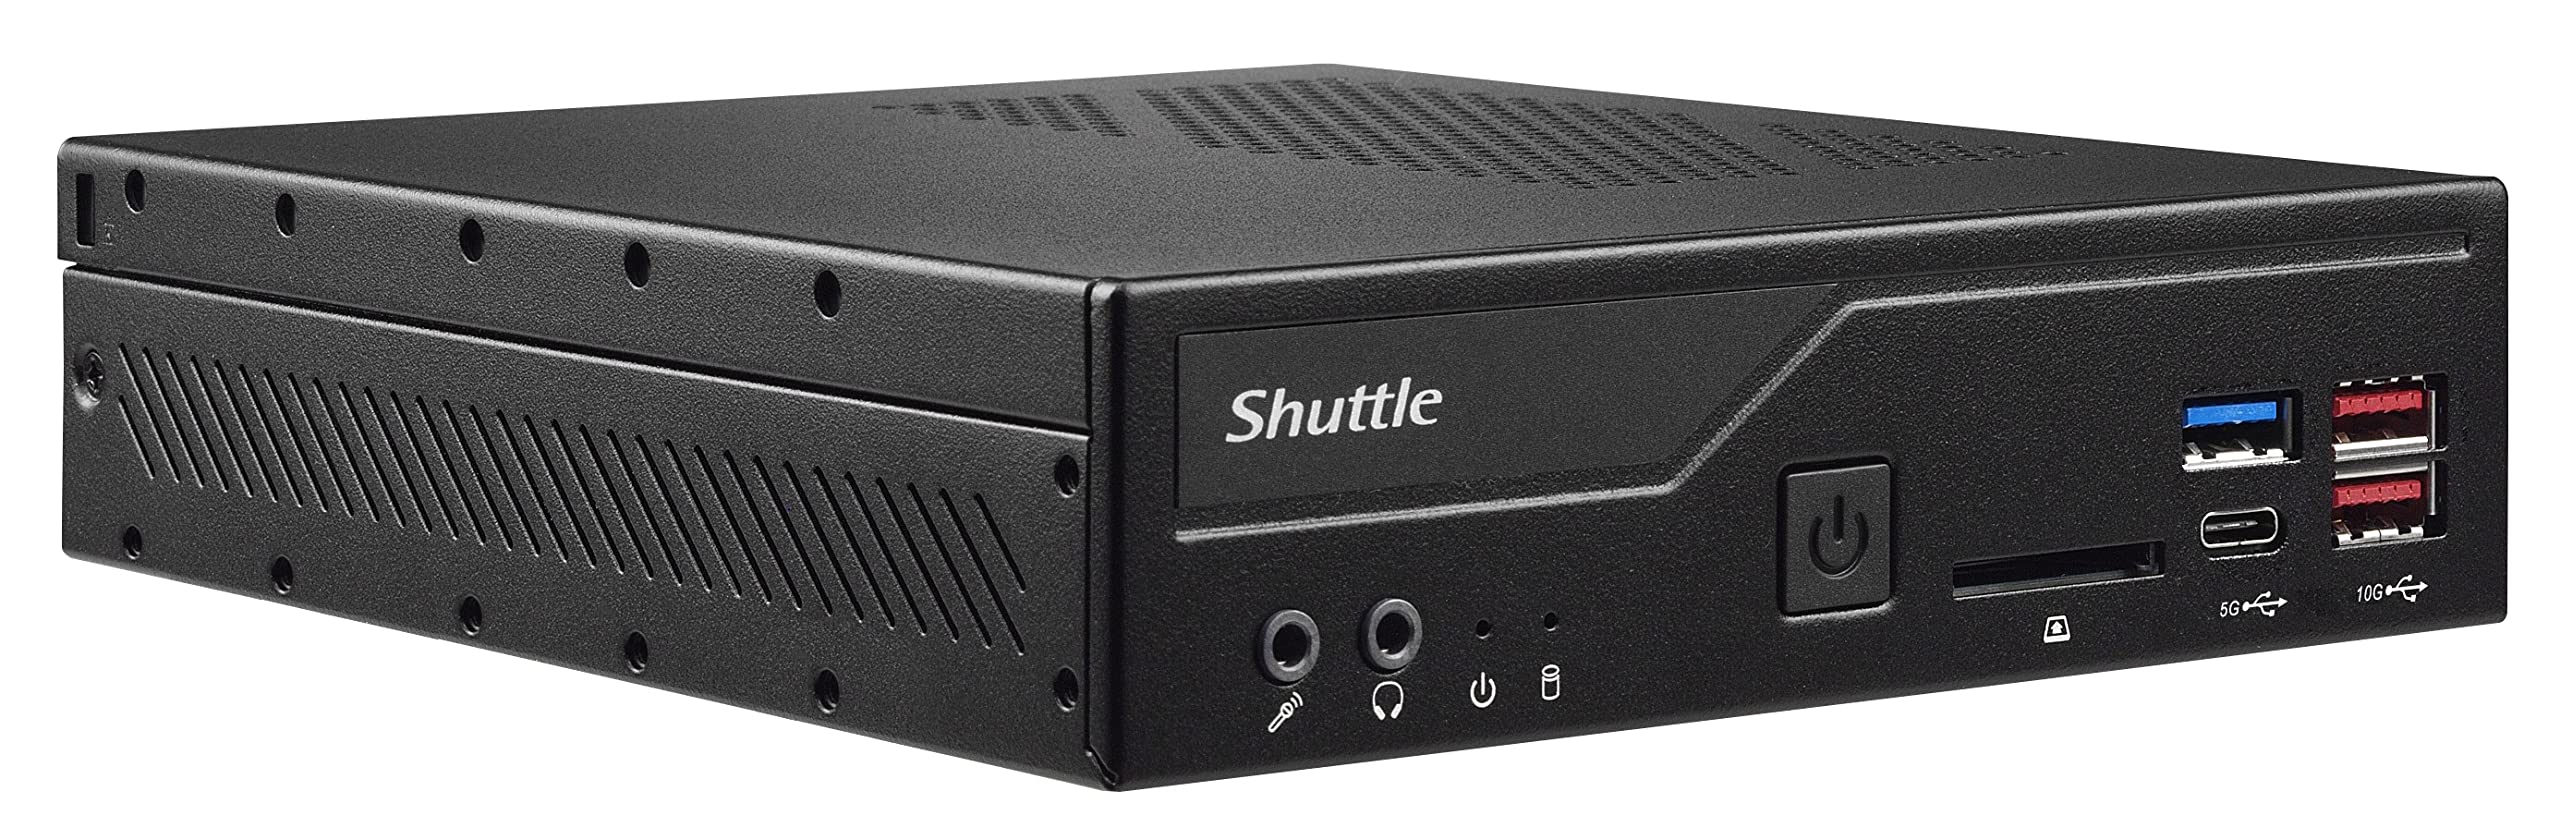 Shuttle XPC Slim DH670 Mini Barebone PC Intel H610 Support 65W Cometlake CPU No Ram No HDD/SSD No CPU No OS